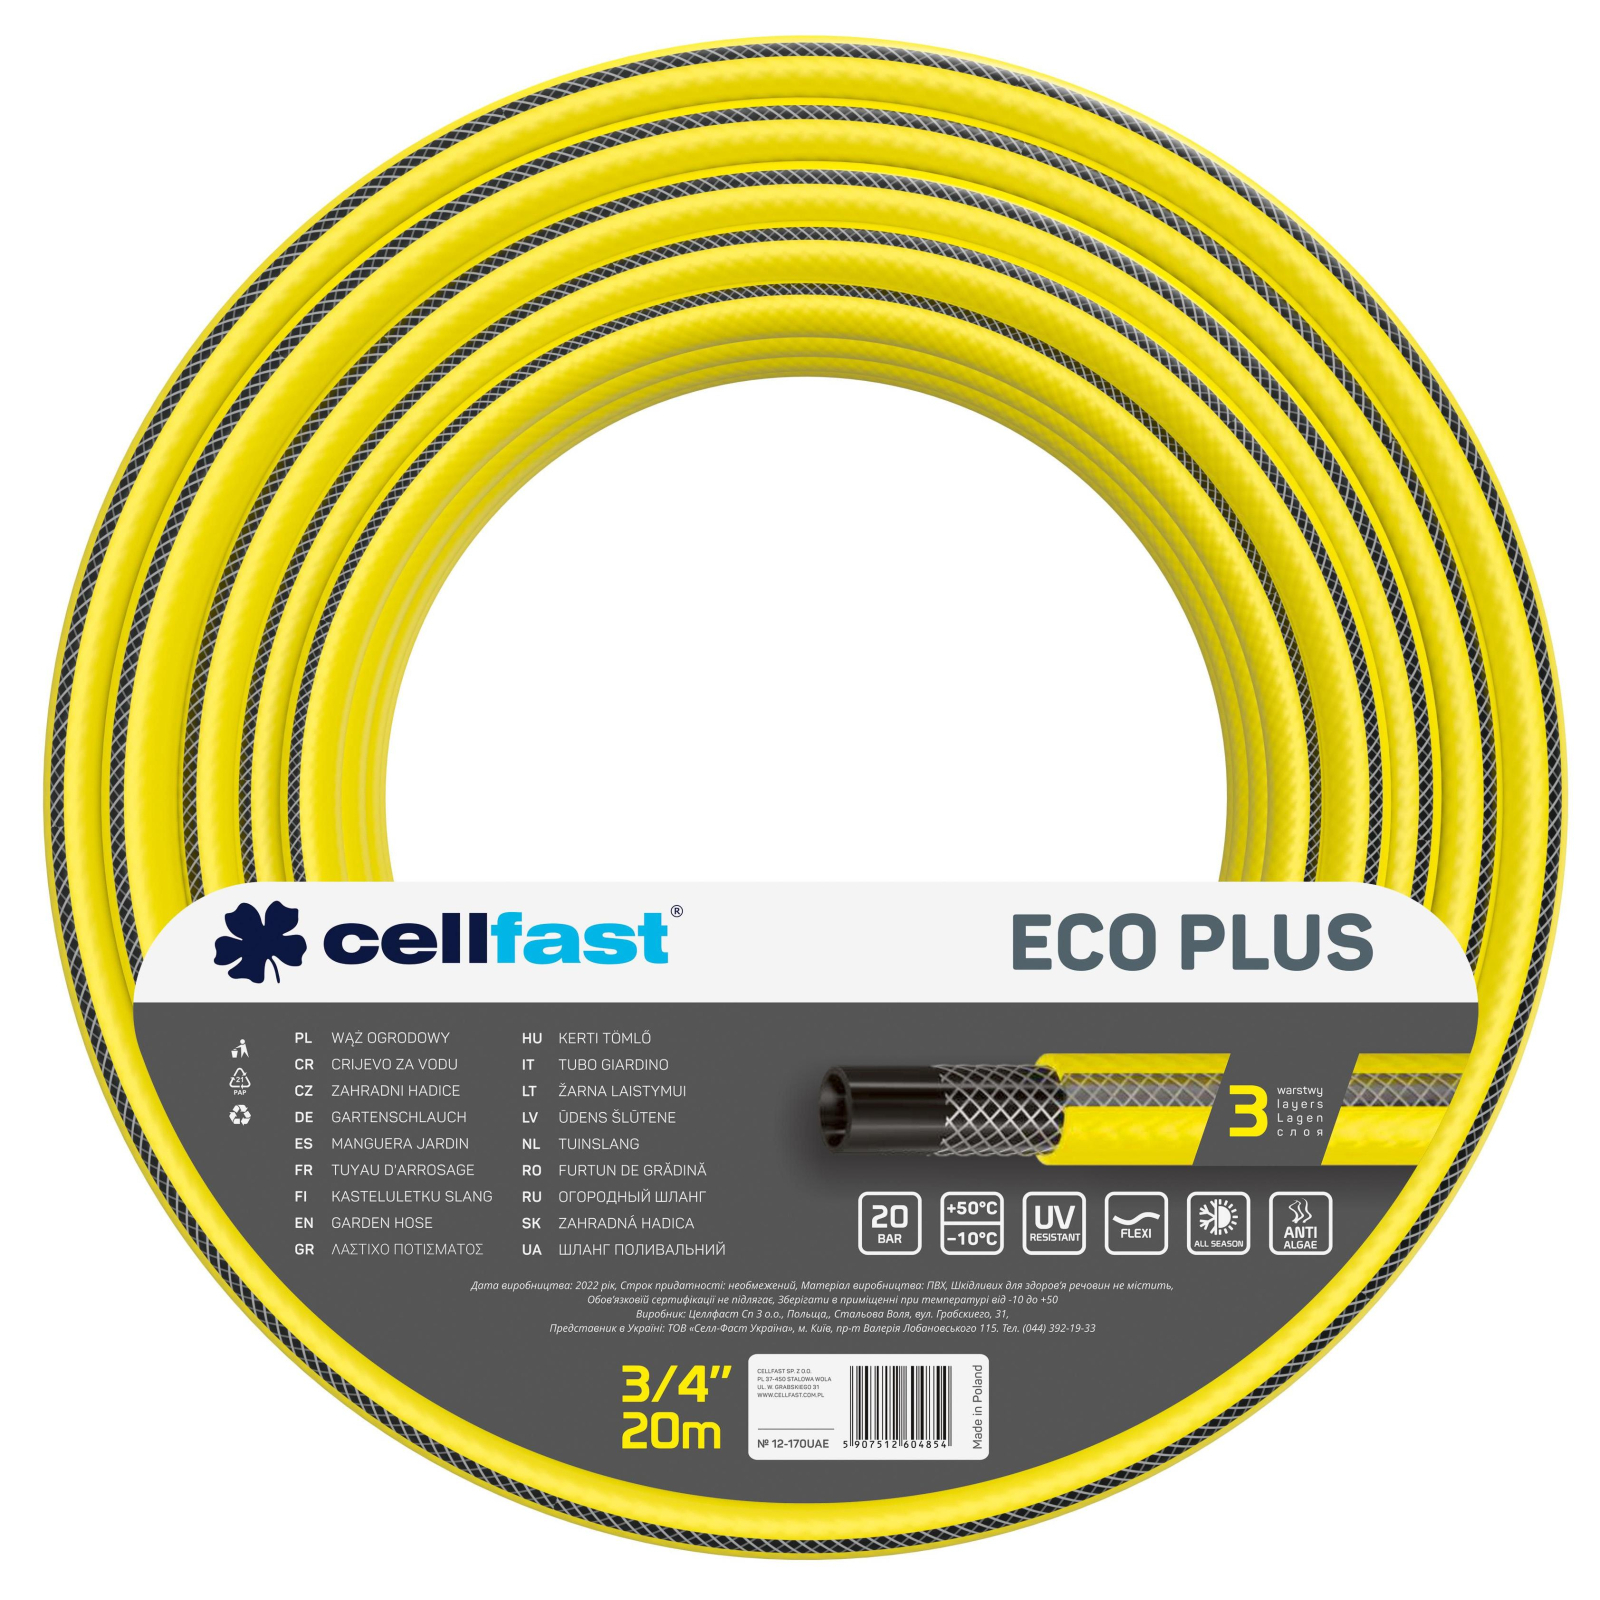 Поливочный шланг Cellfast ECO PLUS 3/4" 20м, 3 слоя, до 20 Бар, -10…+50°C (12-170)